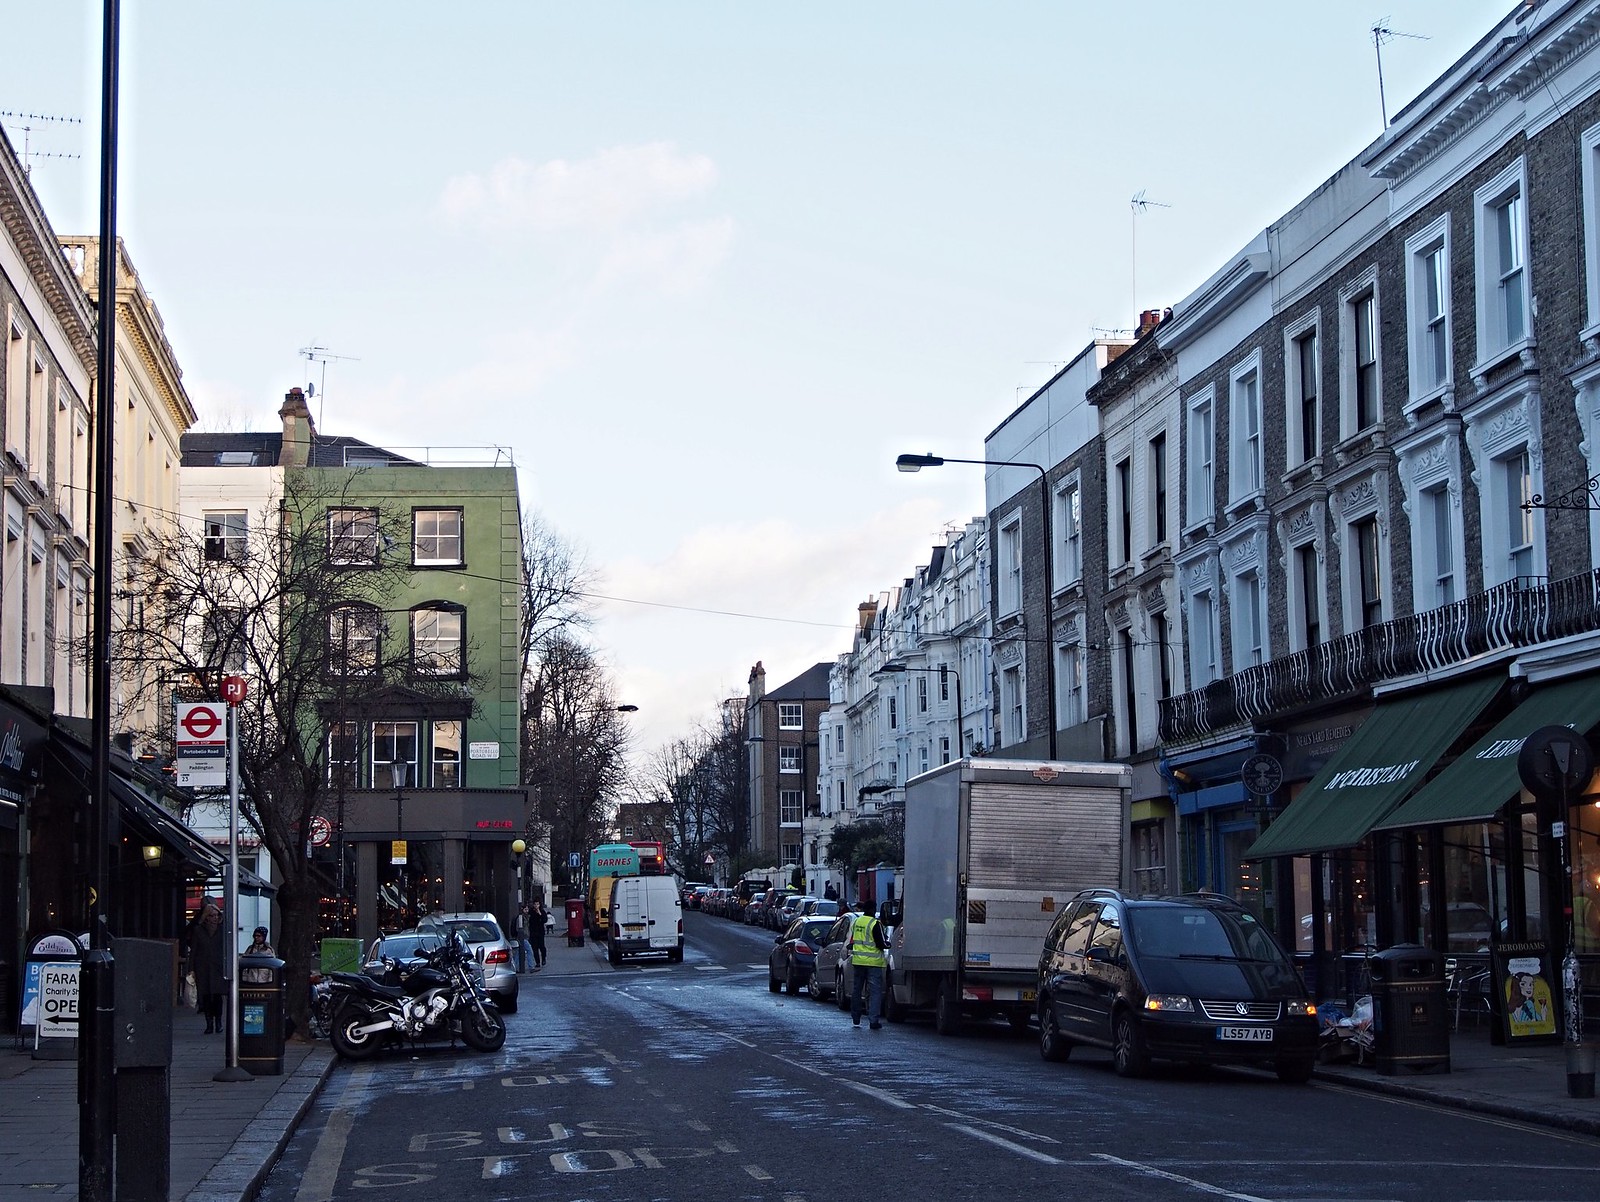 Notting Hill